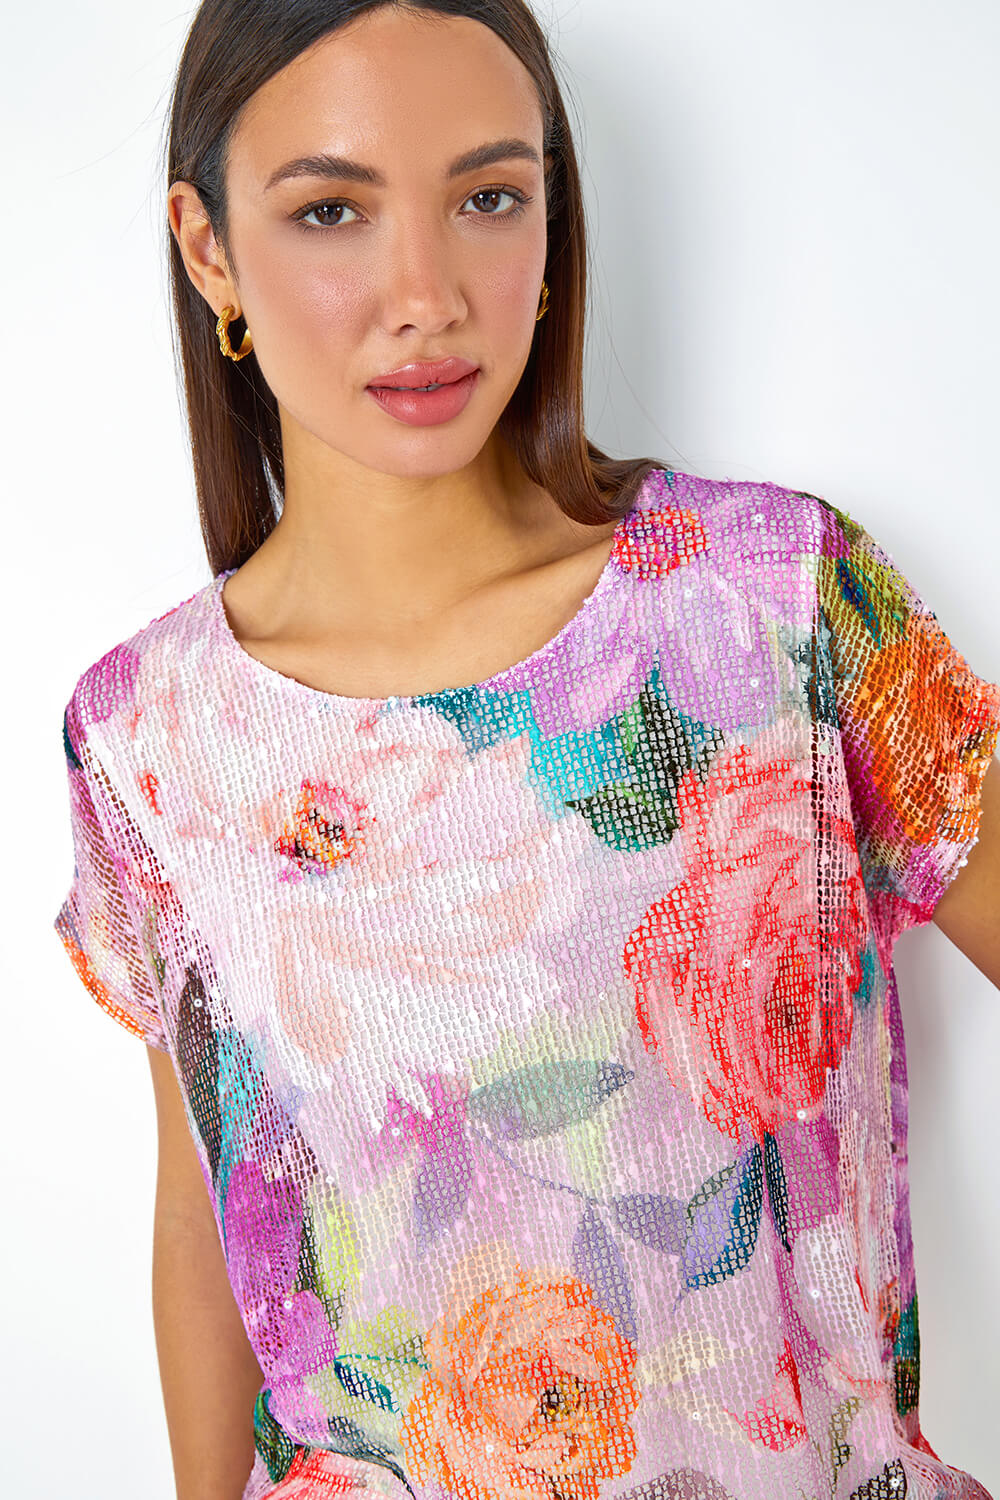 Mesh Overlay Floral Print T-Shirt